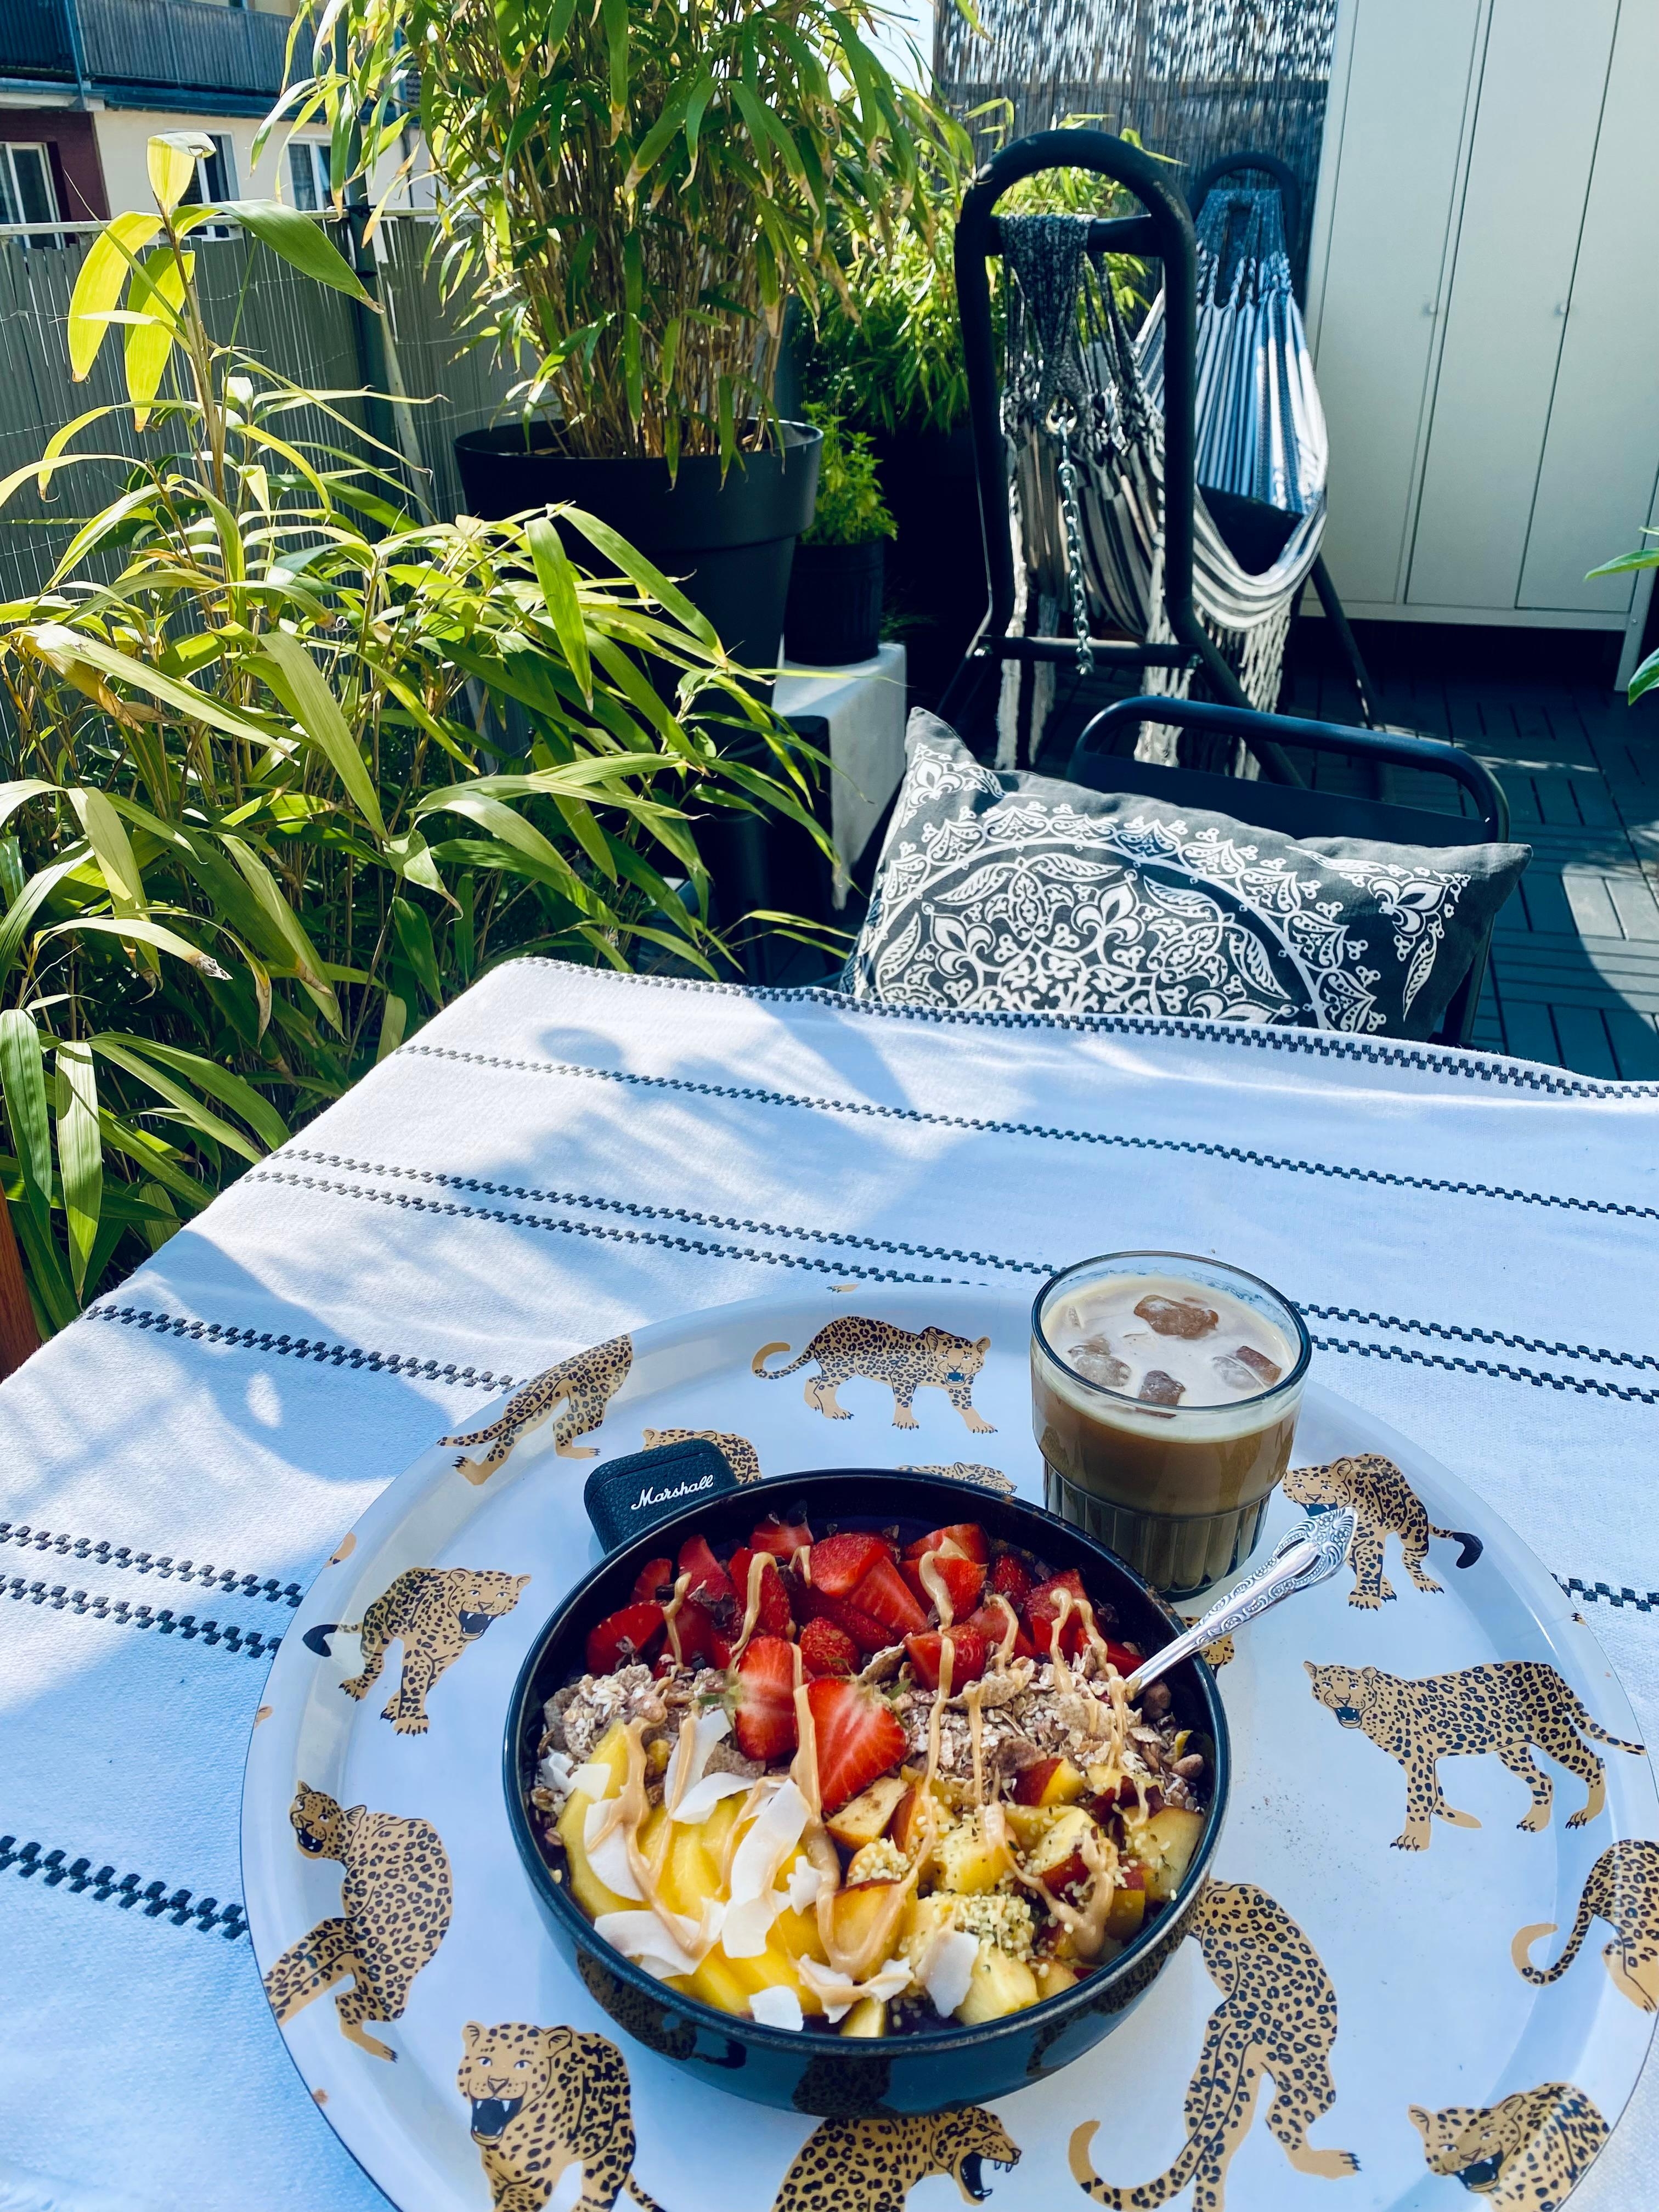 Balcony breakfast 🖤 
#breakfastlover #outdoorlivingroom #acaibowl 